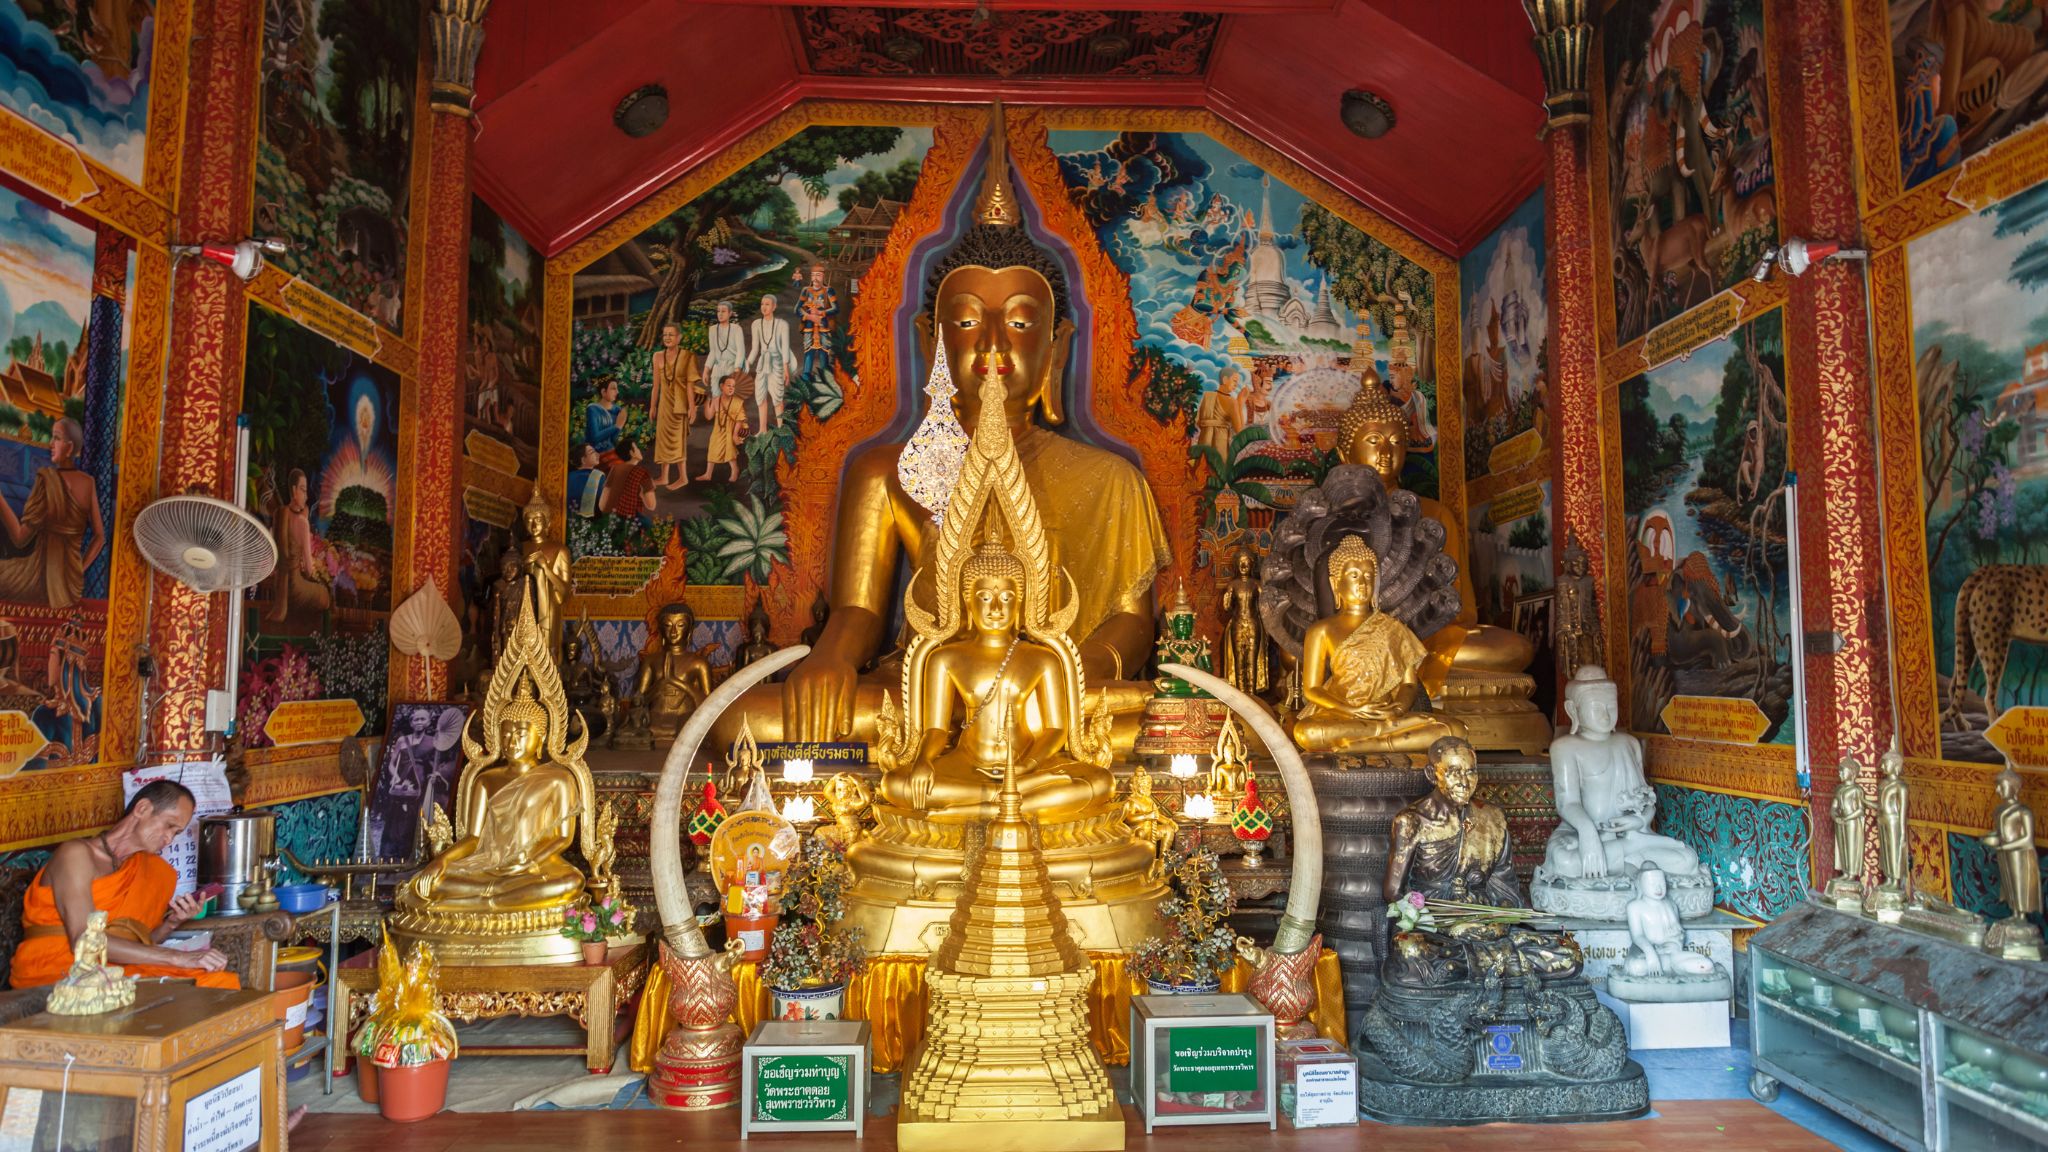 Day 6 Admire The Golden Statue In Doi Suthep Temple